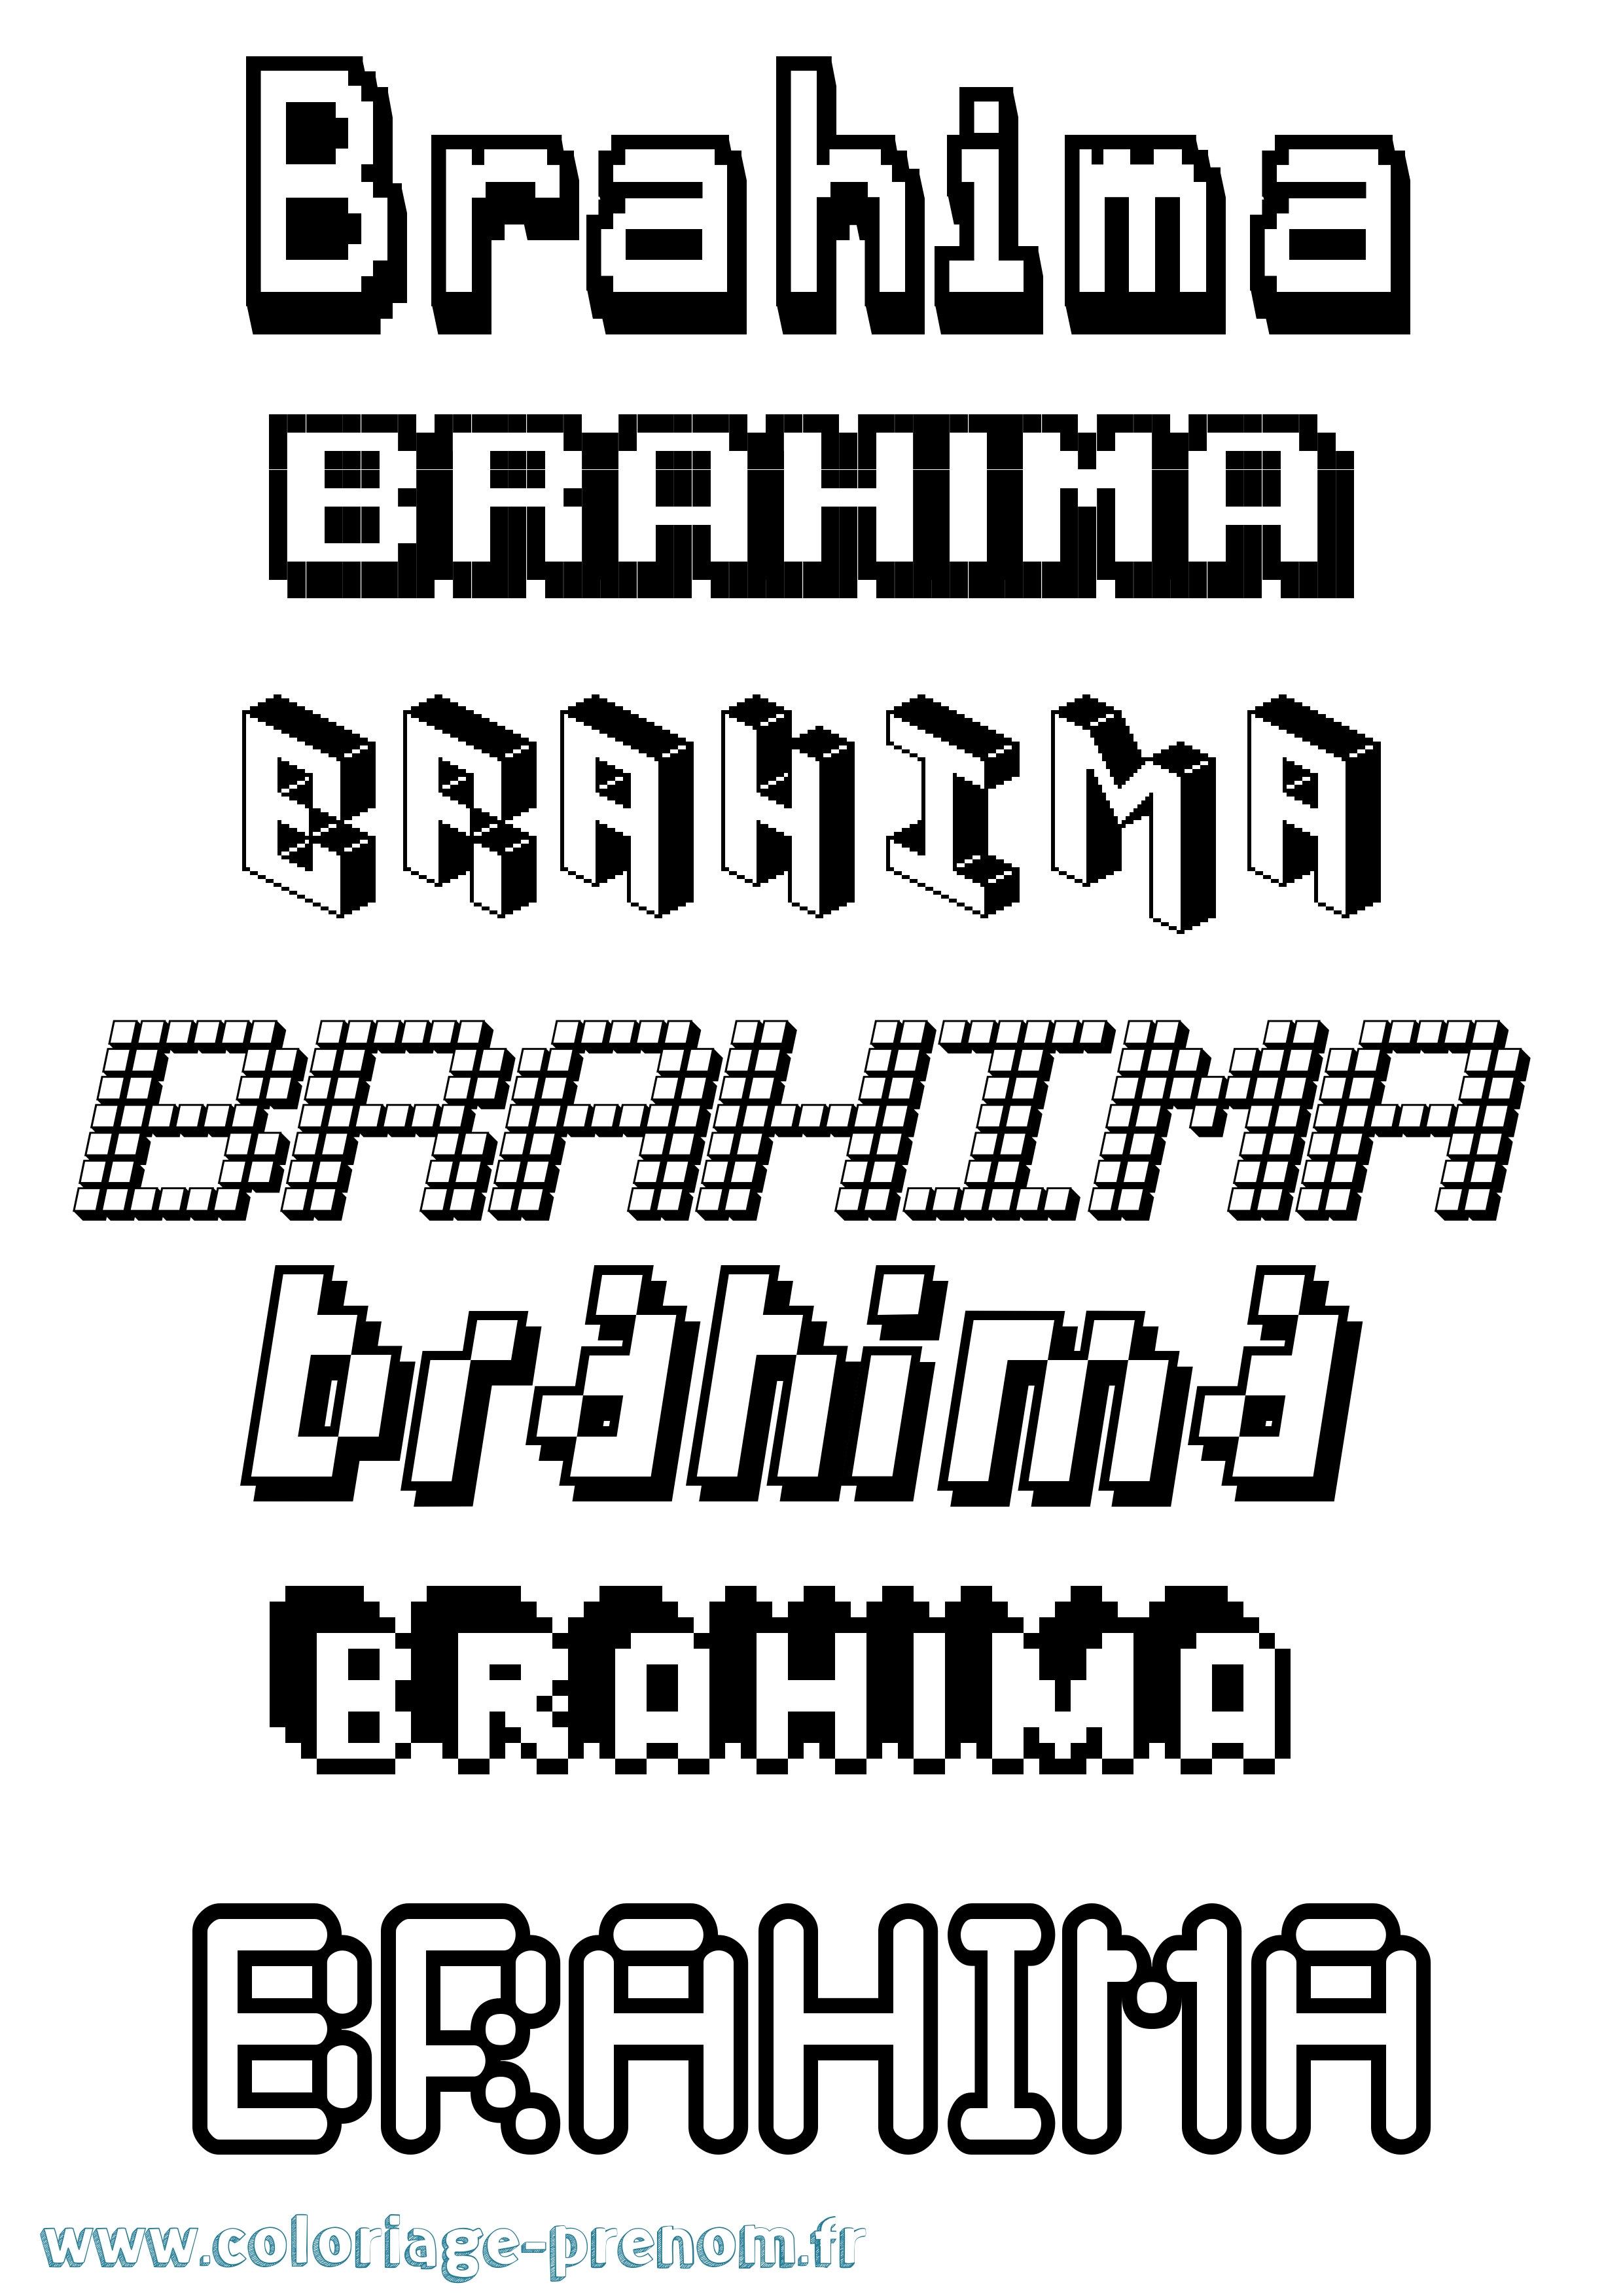 Coloriage prénom Brahima Pixel